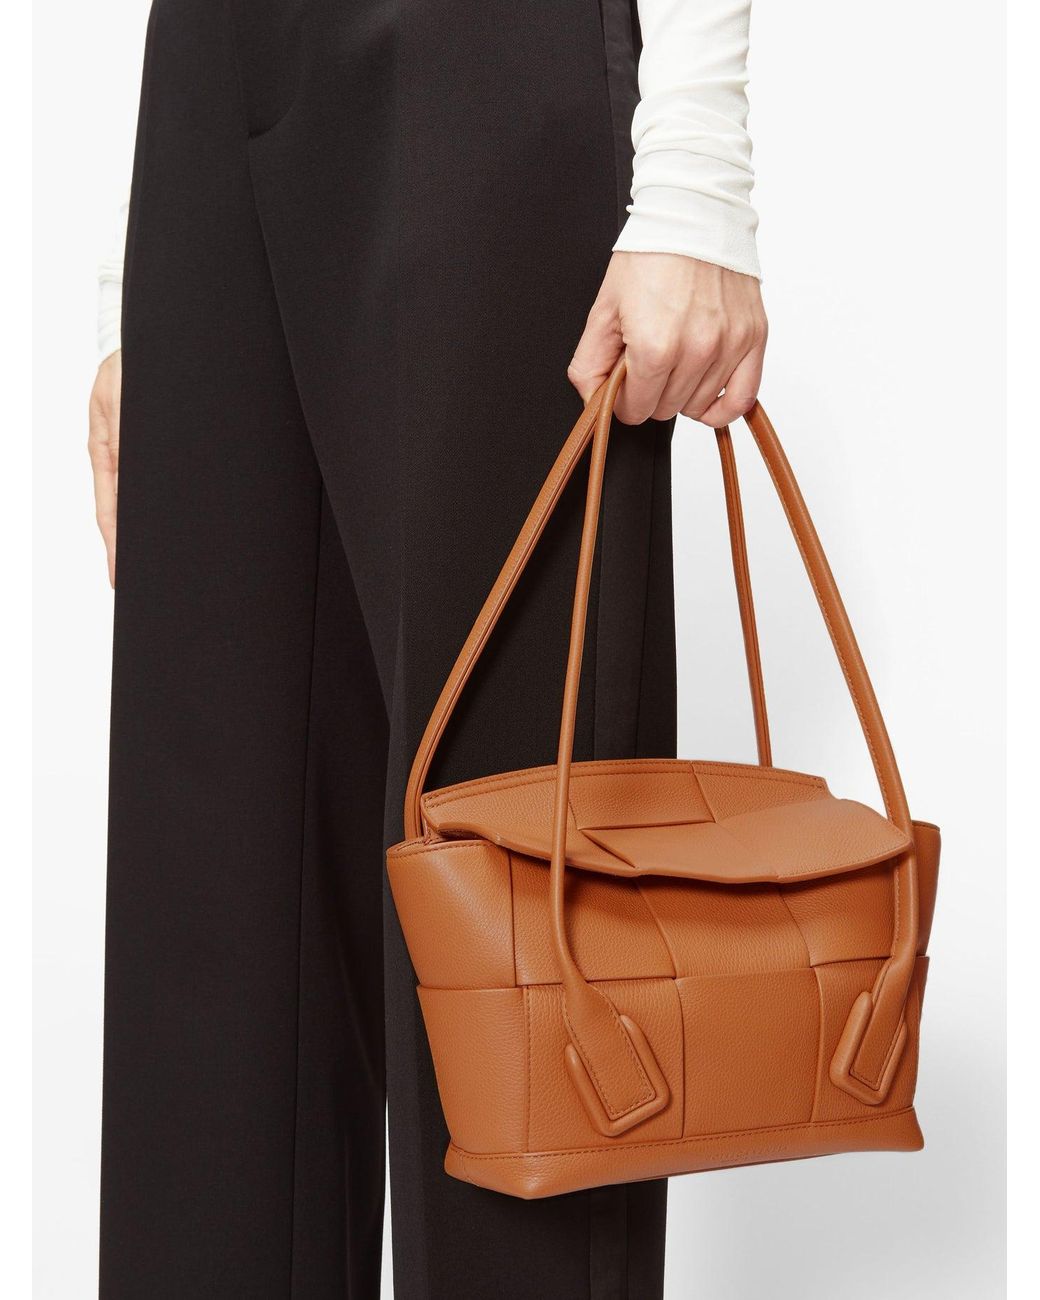 Bottega Veneta The Arco Mini Leather Bag in Brown | Lyst